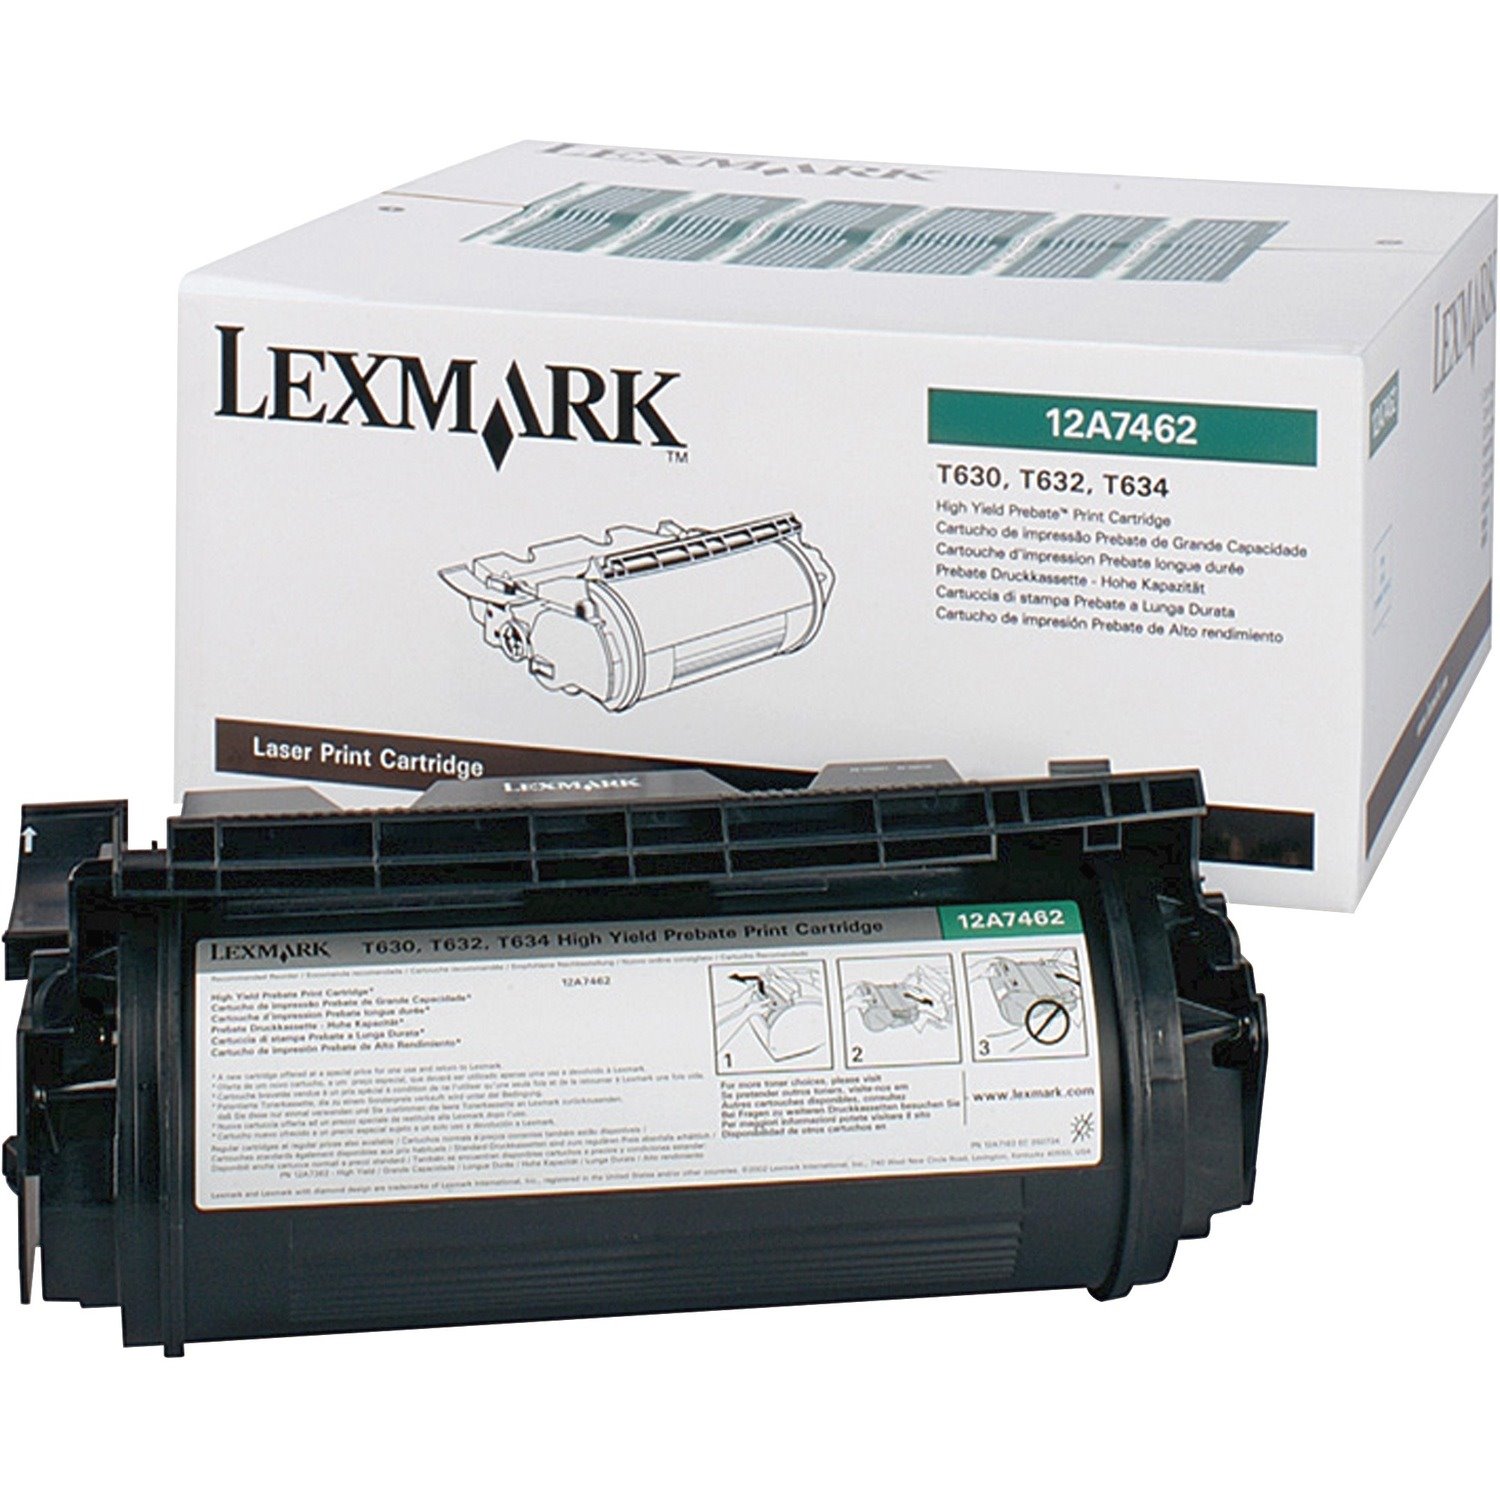 Lexmark 12A7462 Original Laser Toner Cartridge - Black - 1 Pack